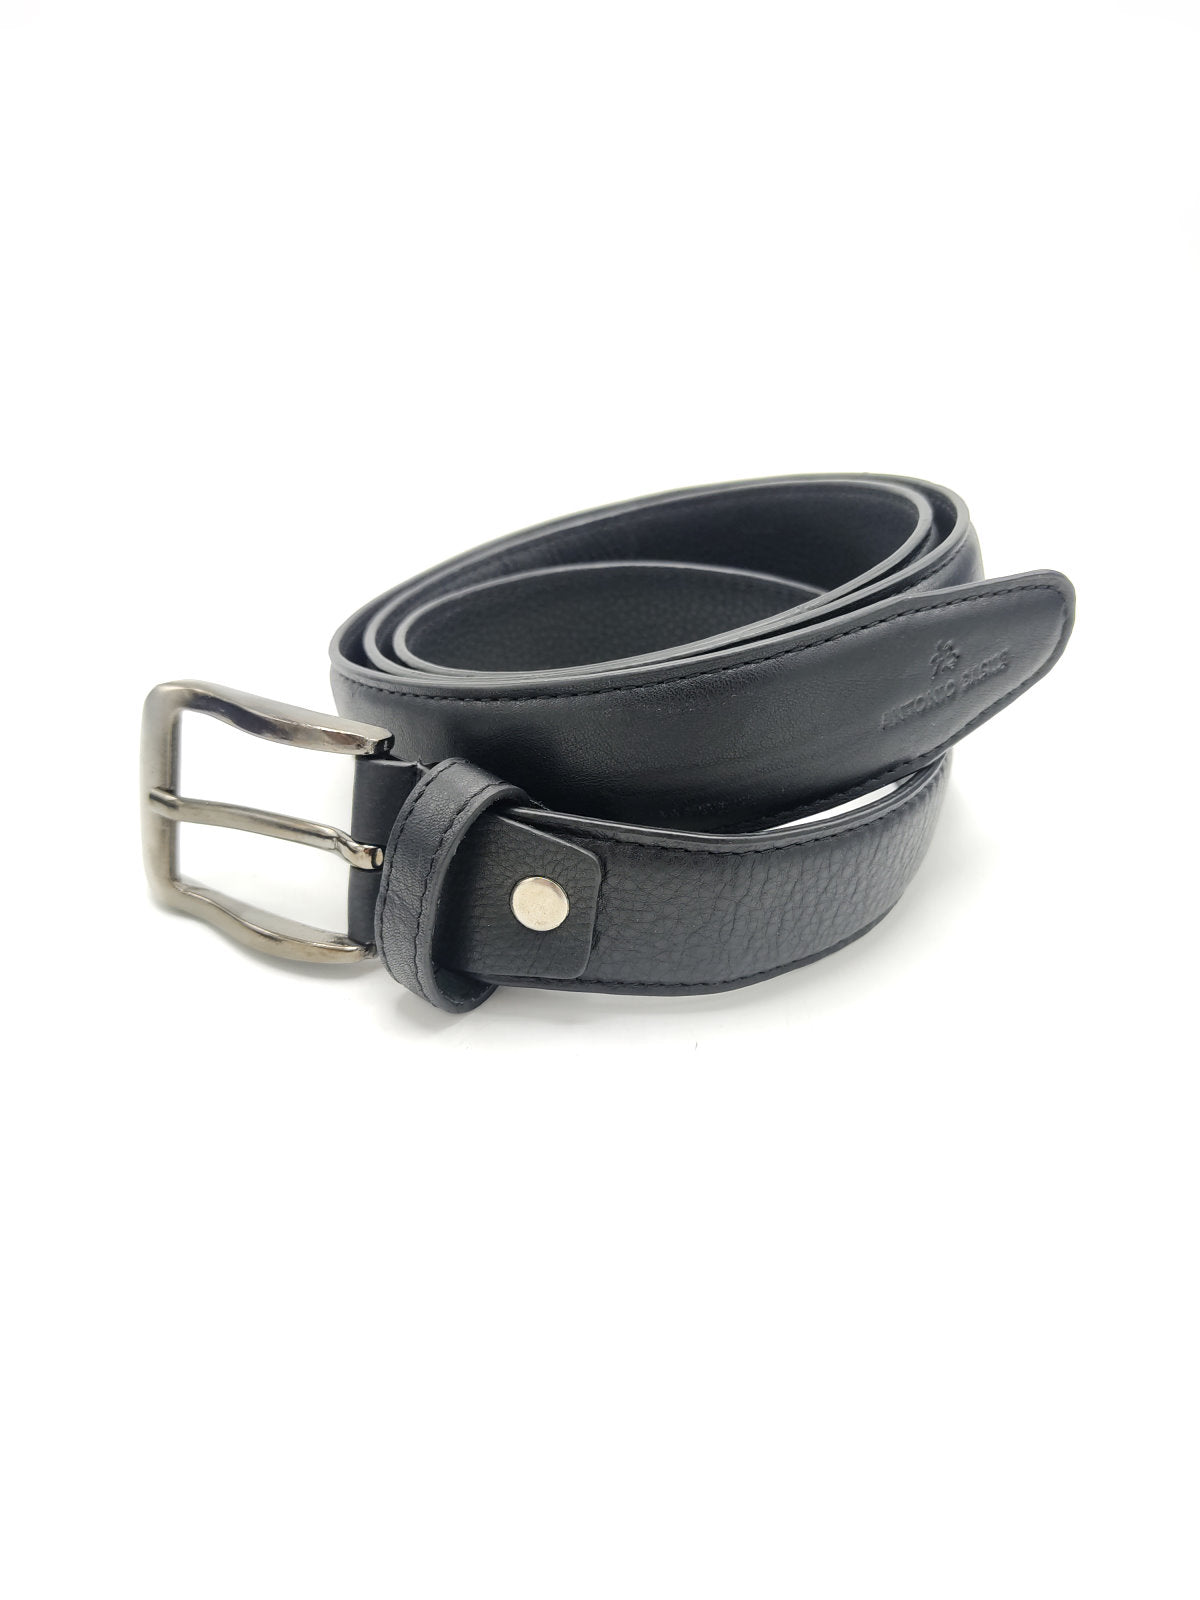 Gift box leather wallet + leather belt, for men, brand Antonio Basile, art. 1123-CINT.422